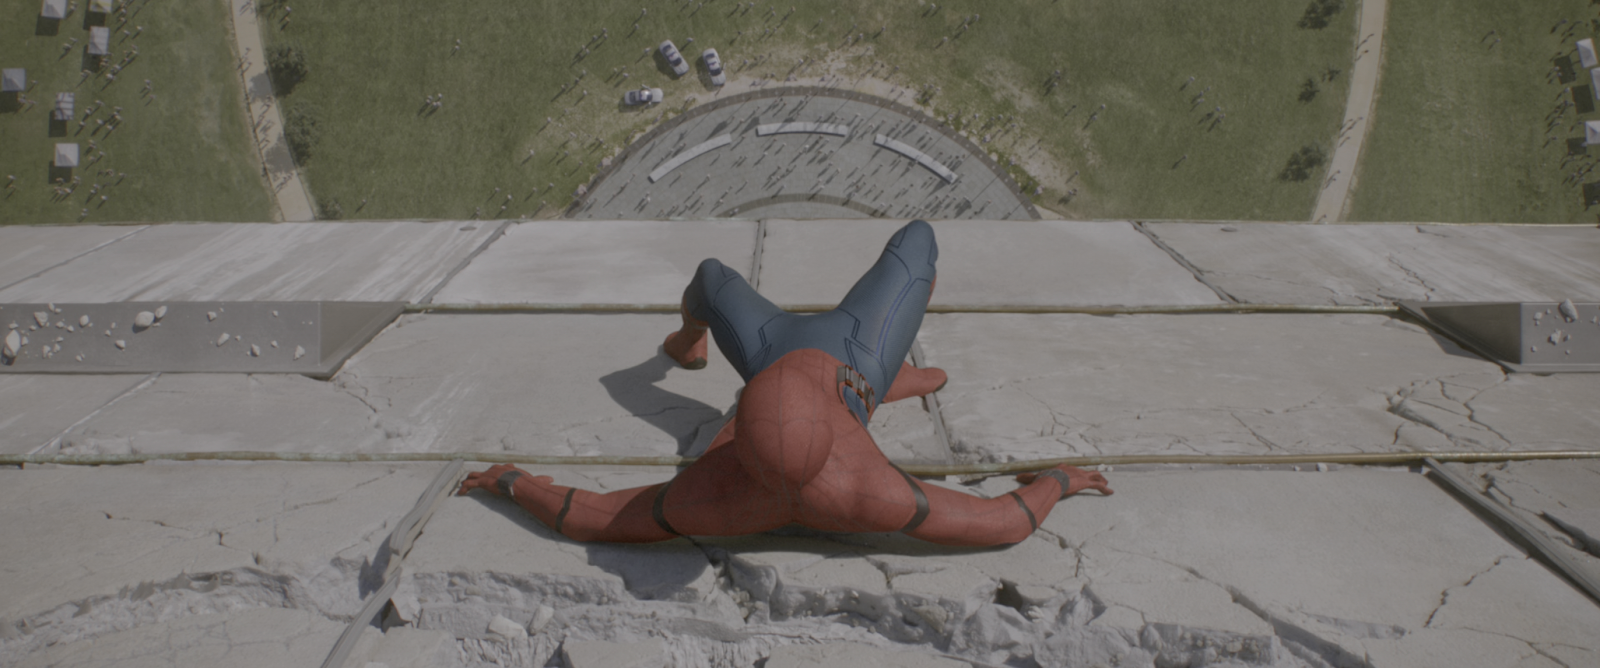 Spider-Man de regreso a casa (2017) 4K UHD HDR Latino 